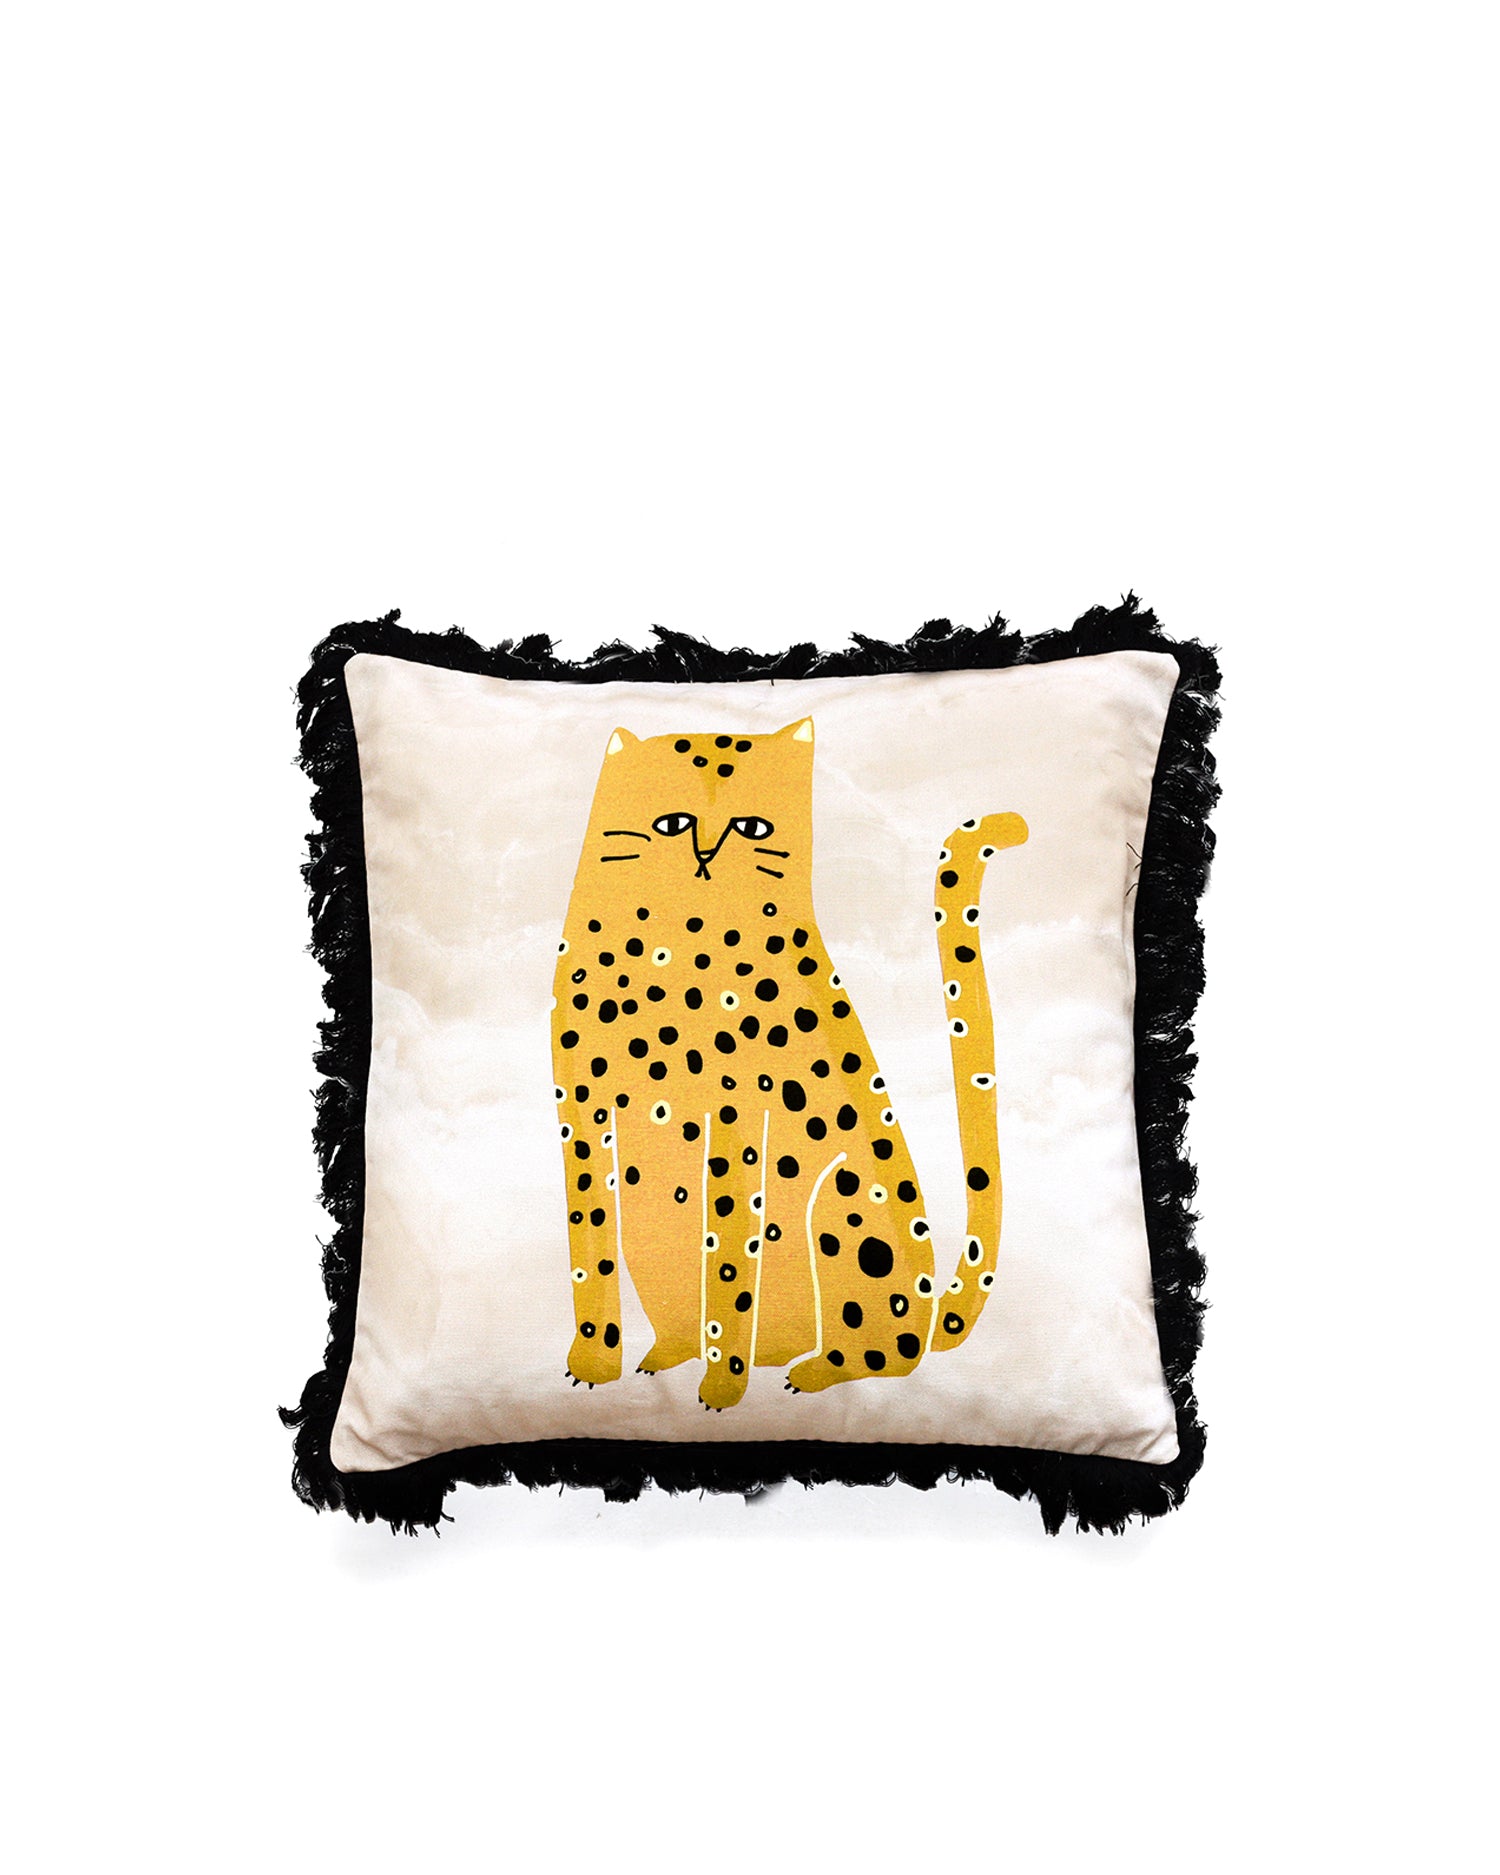 luxury fun printed cat pillow - My Friend Paco